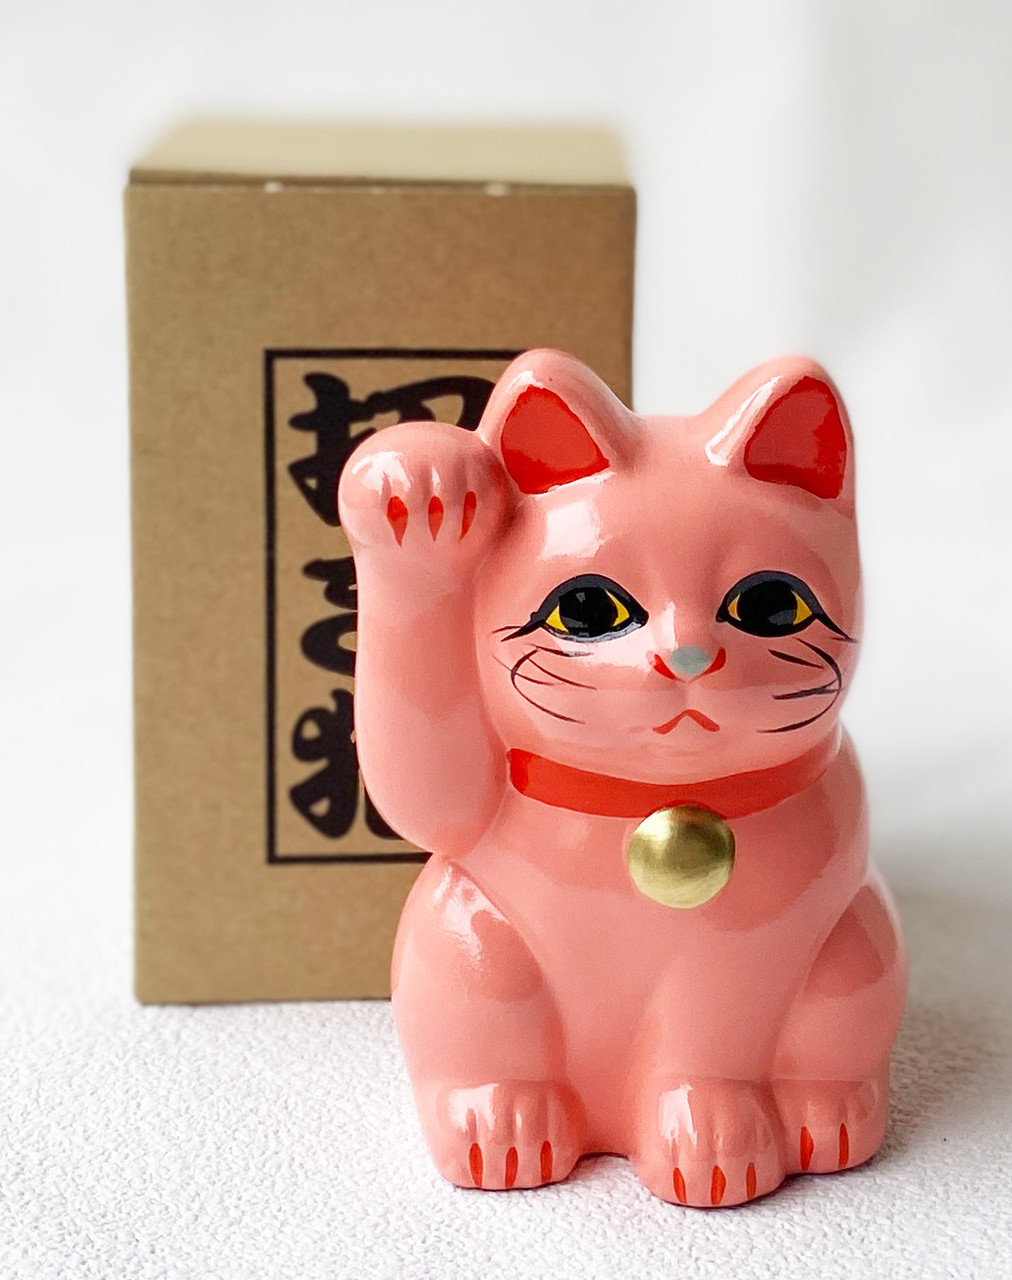 Maneki Neko: Japan's Famous Lucky Cat  Find Japan Blog powered by SUPER  DELIVERY